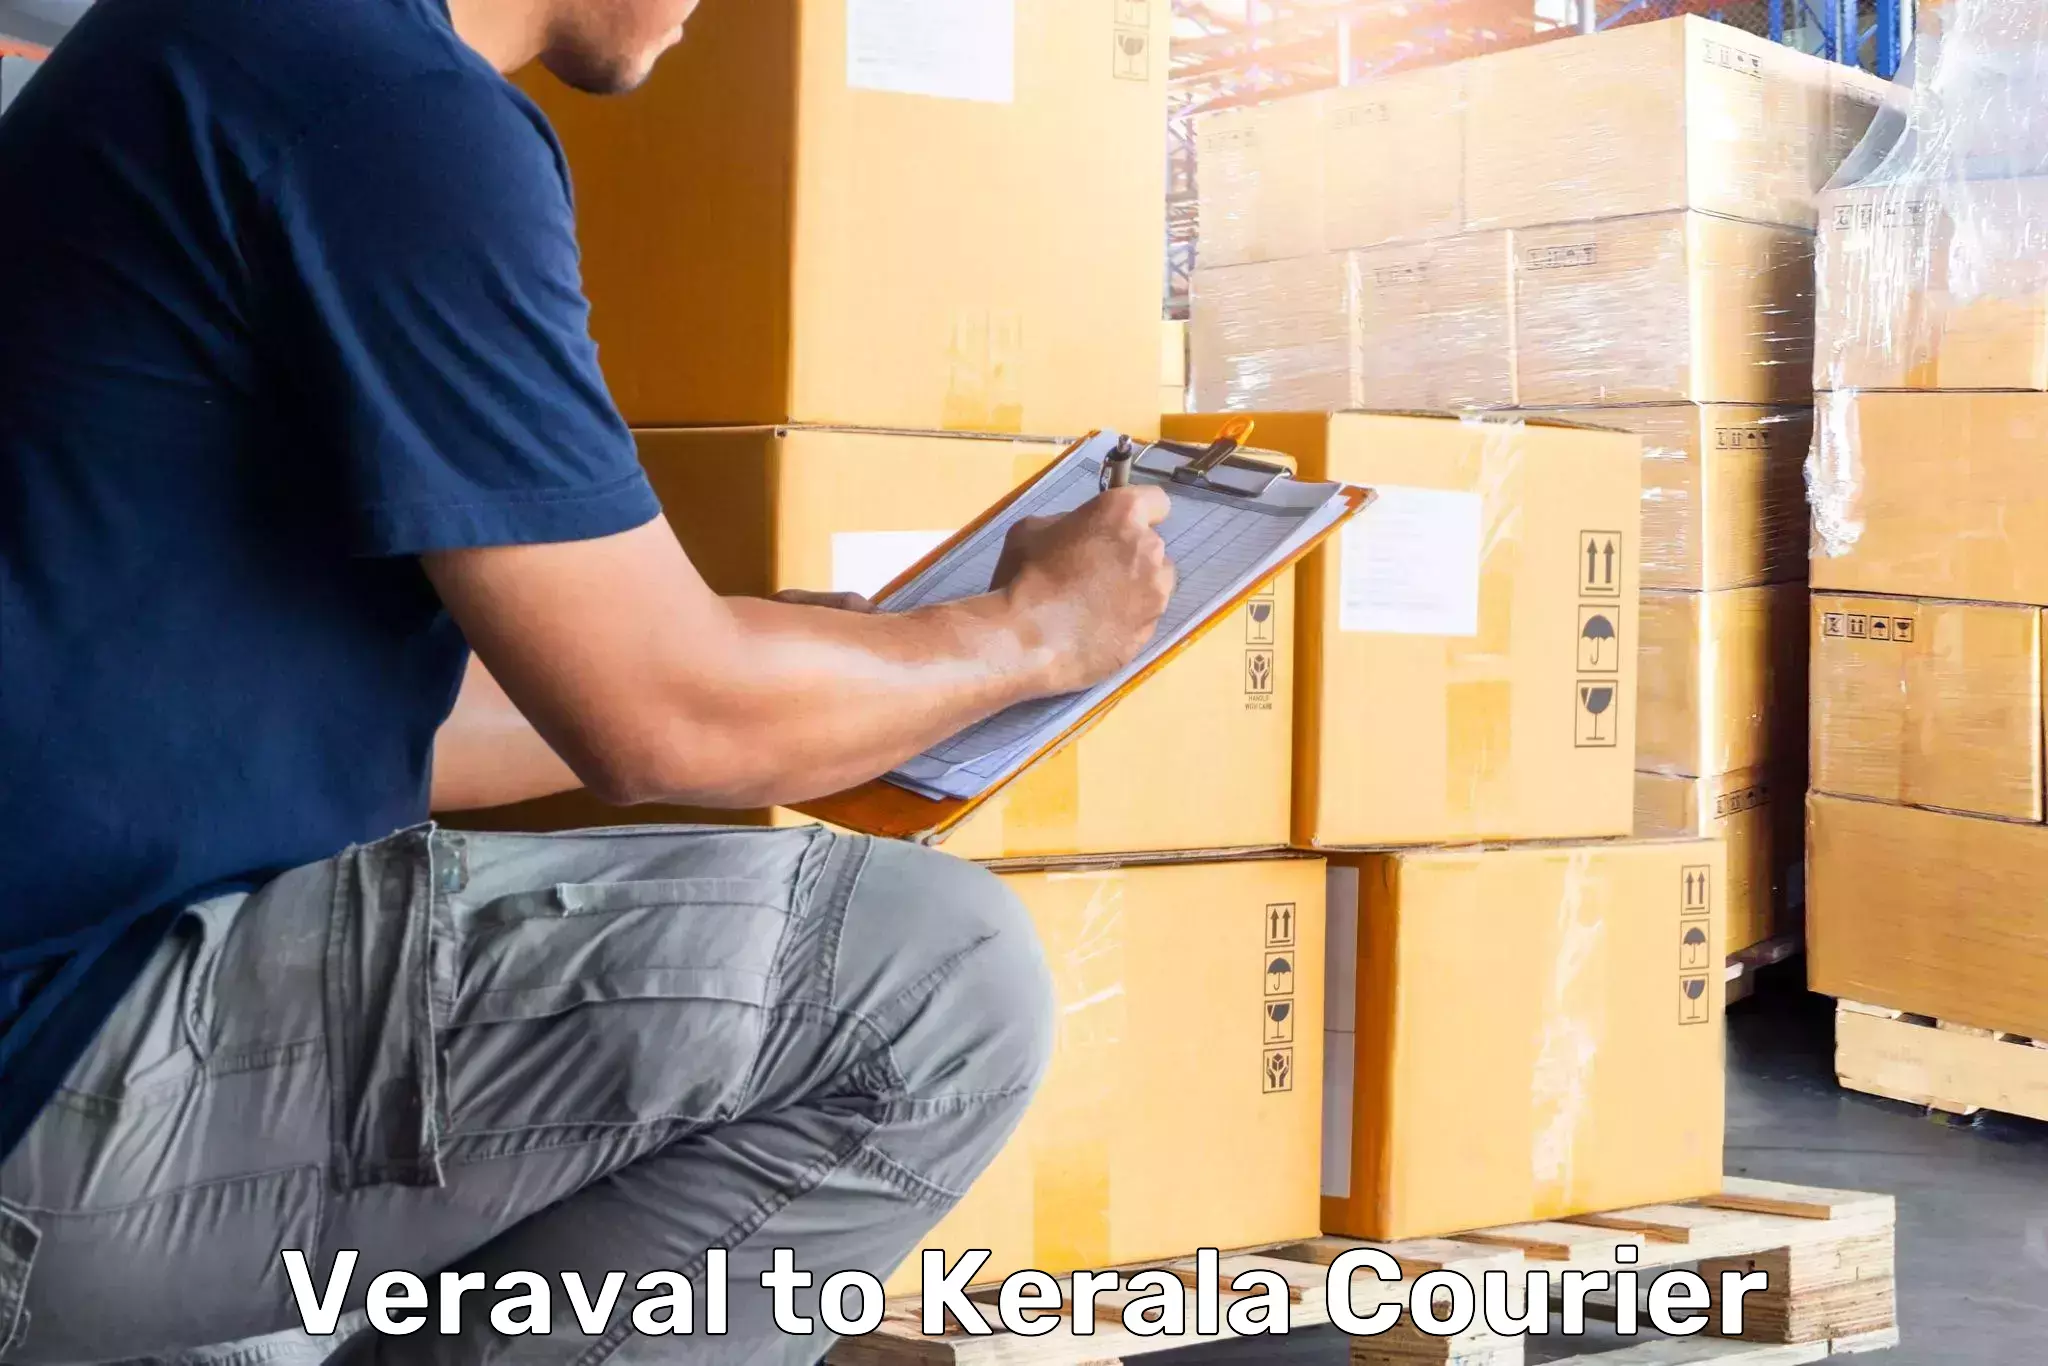 Luggage shipment specialists Veraval to Manjeshwar